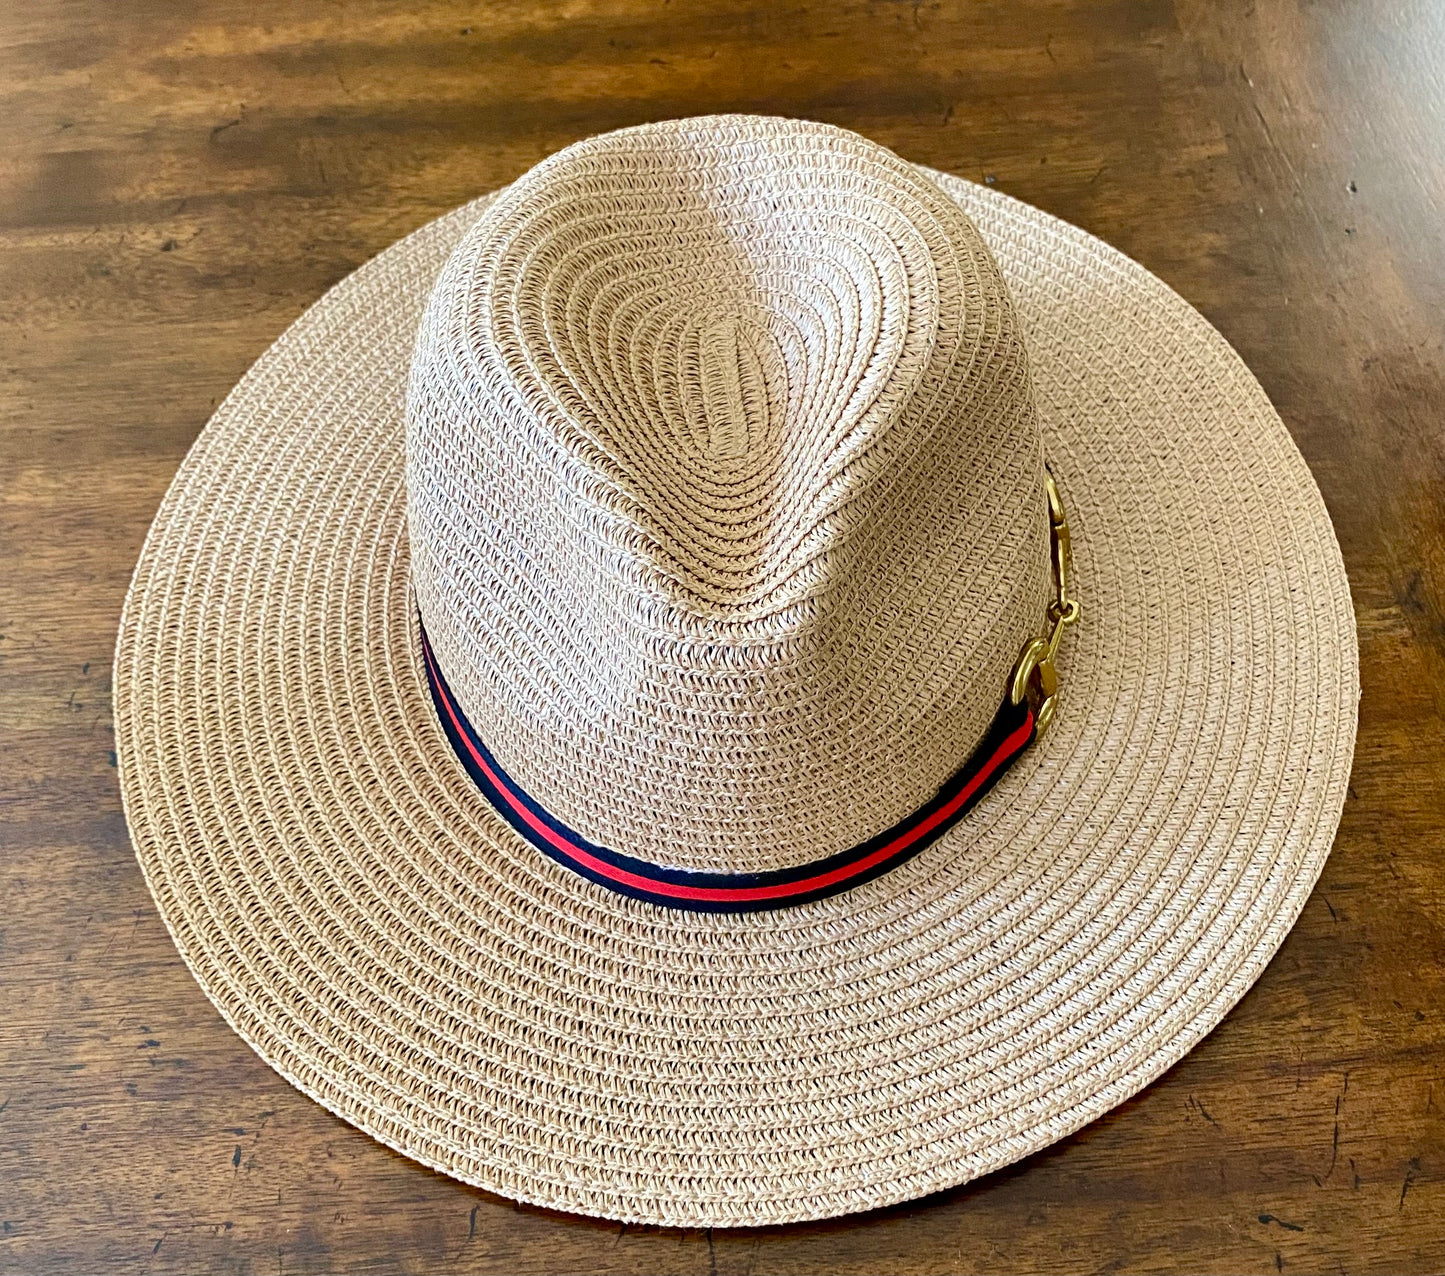 Straw Panama Sun Hat